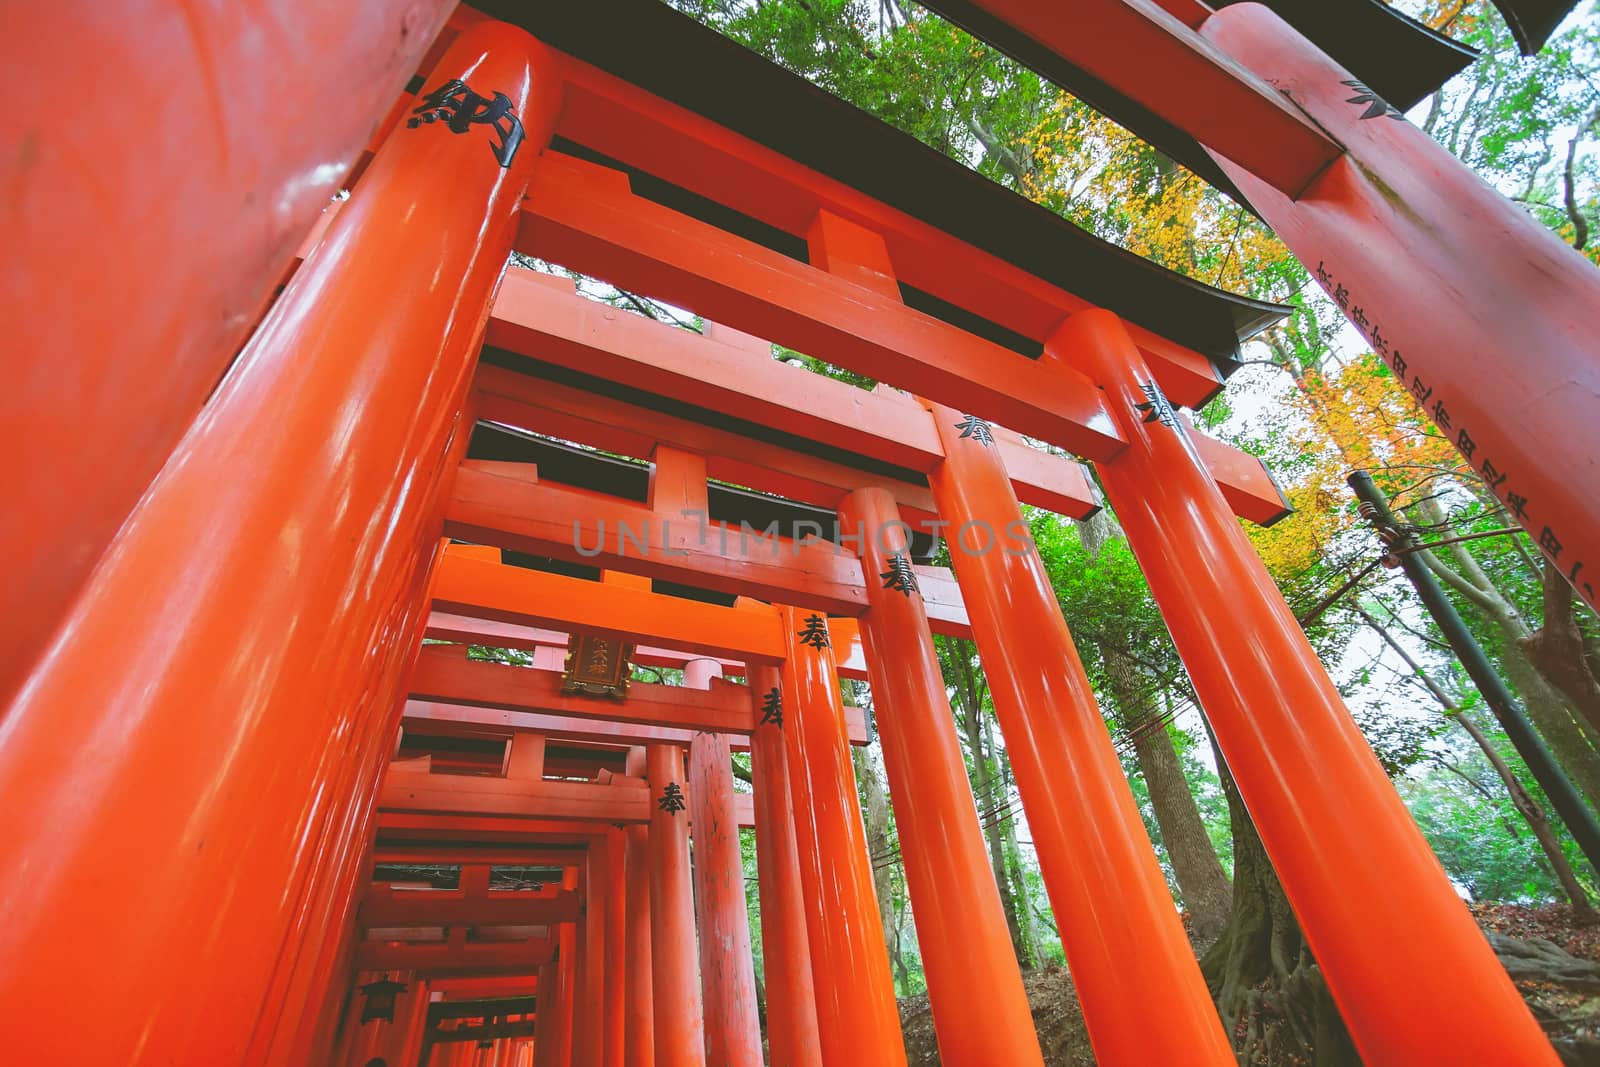 Fushimi Inari Taisha Torii gates in Fushimi-ku, Kyoto, Japan.